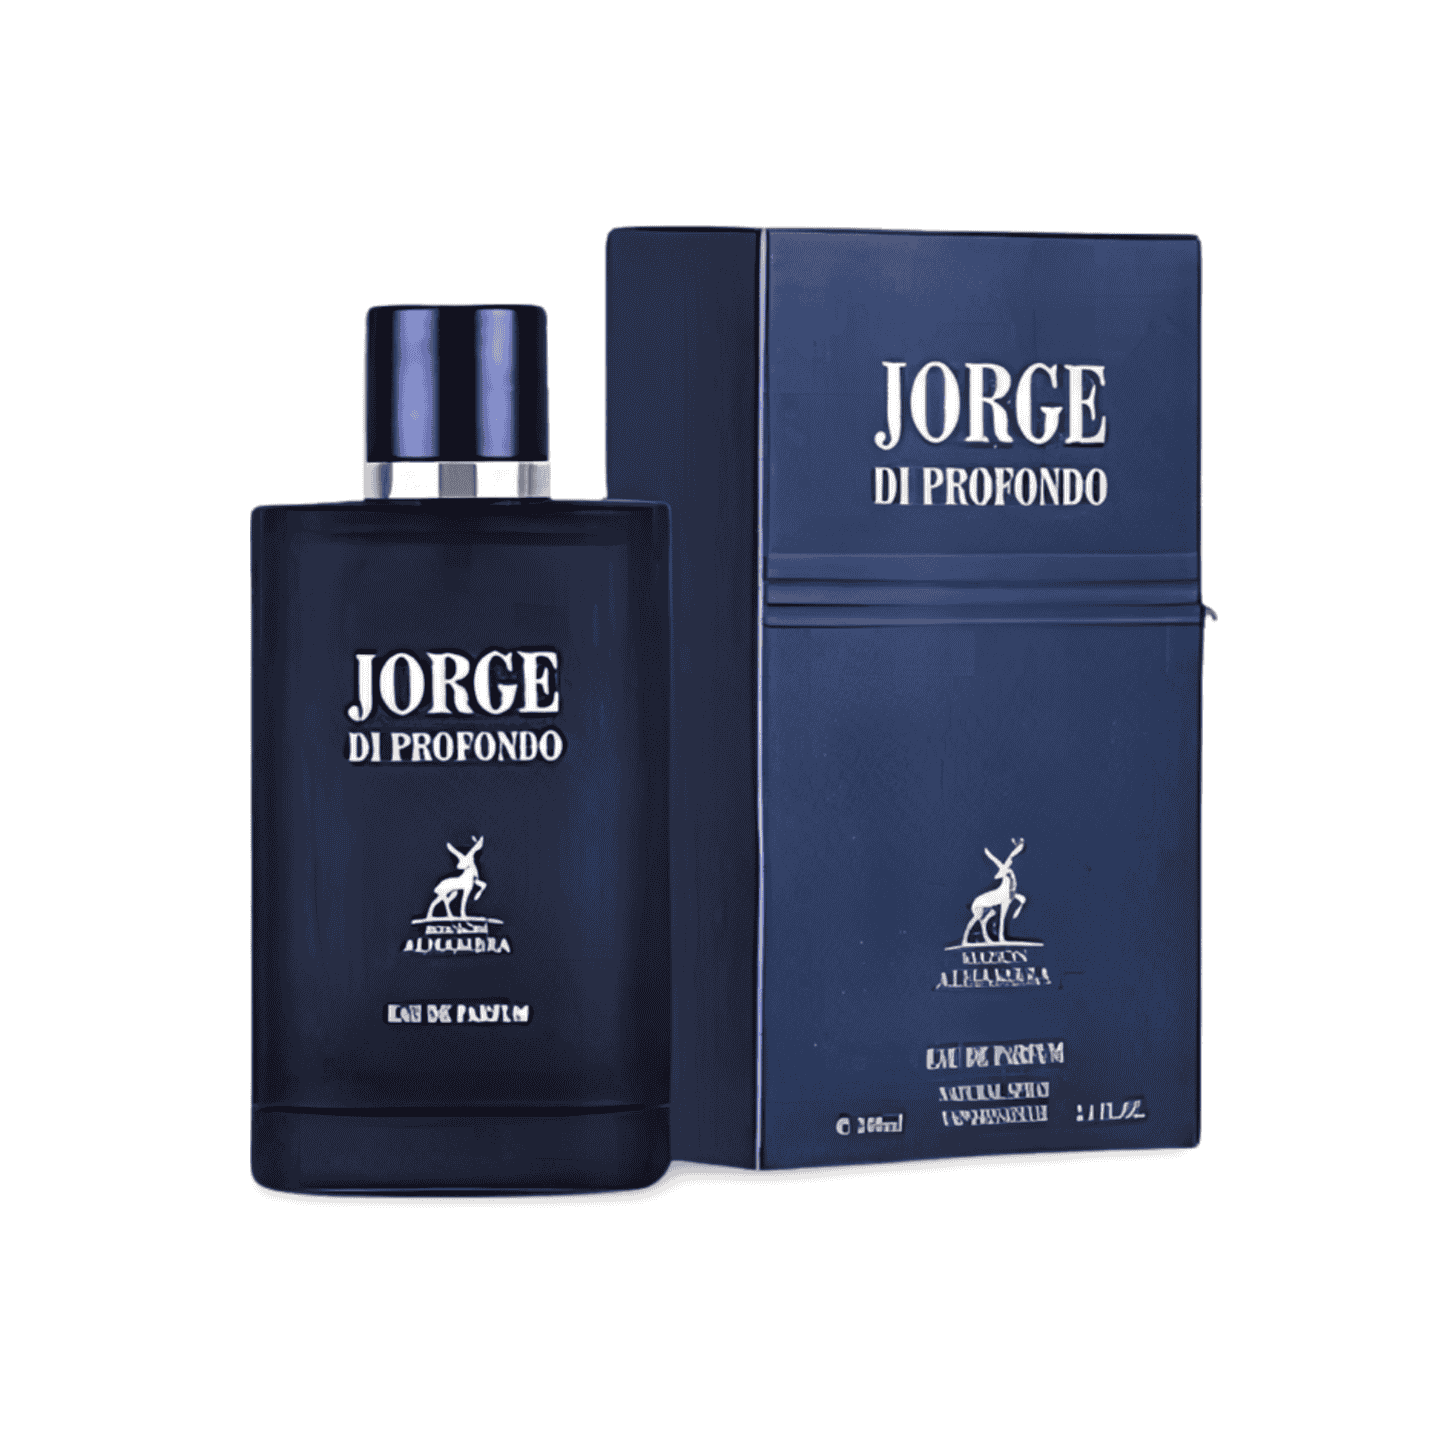 Jorge Perfume - Shop Online